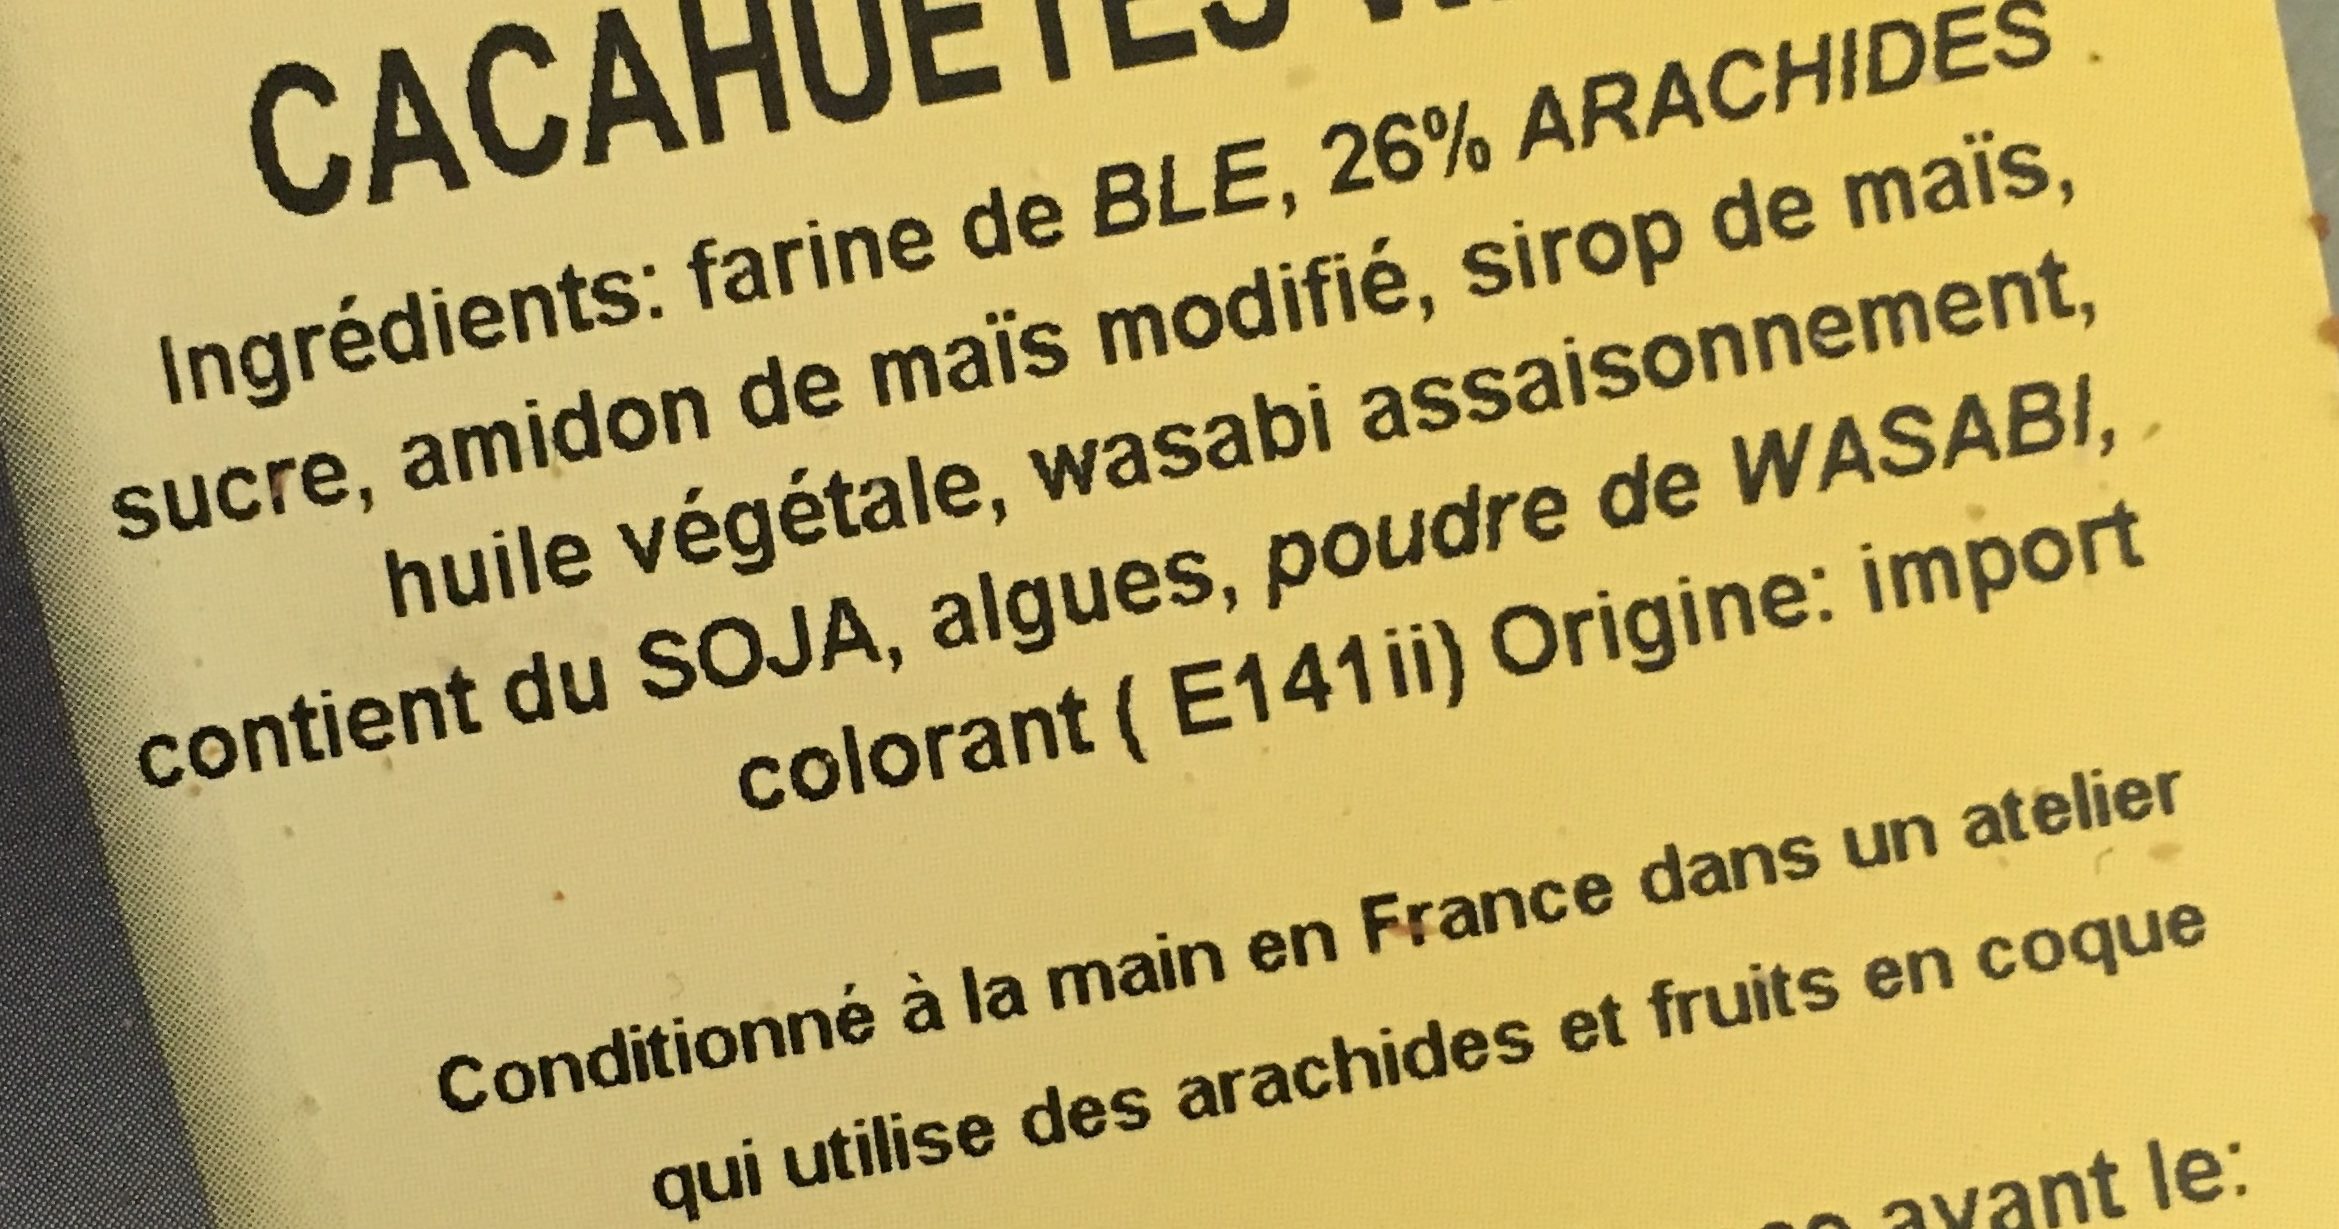 Cacahuètes wasabi - Ingredients - fr